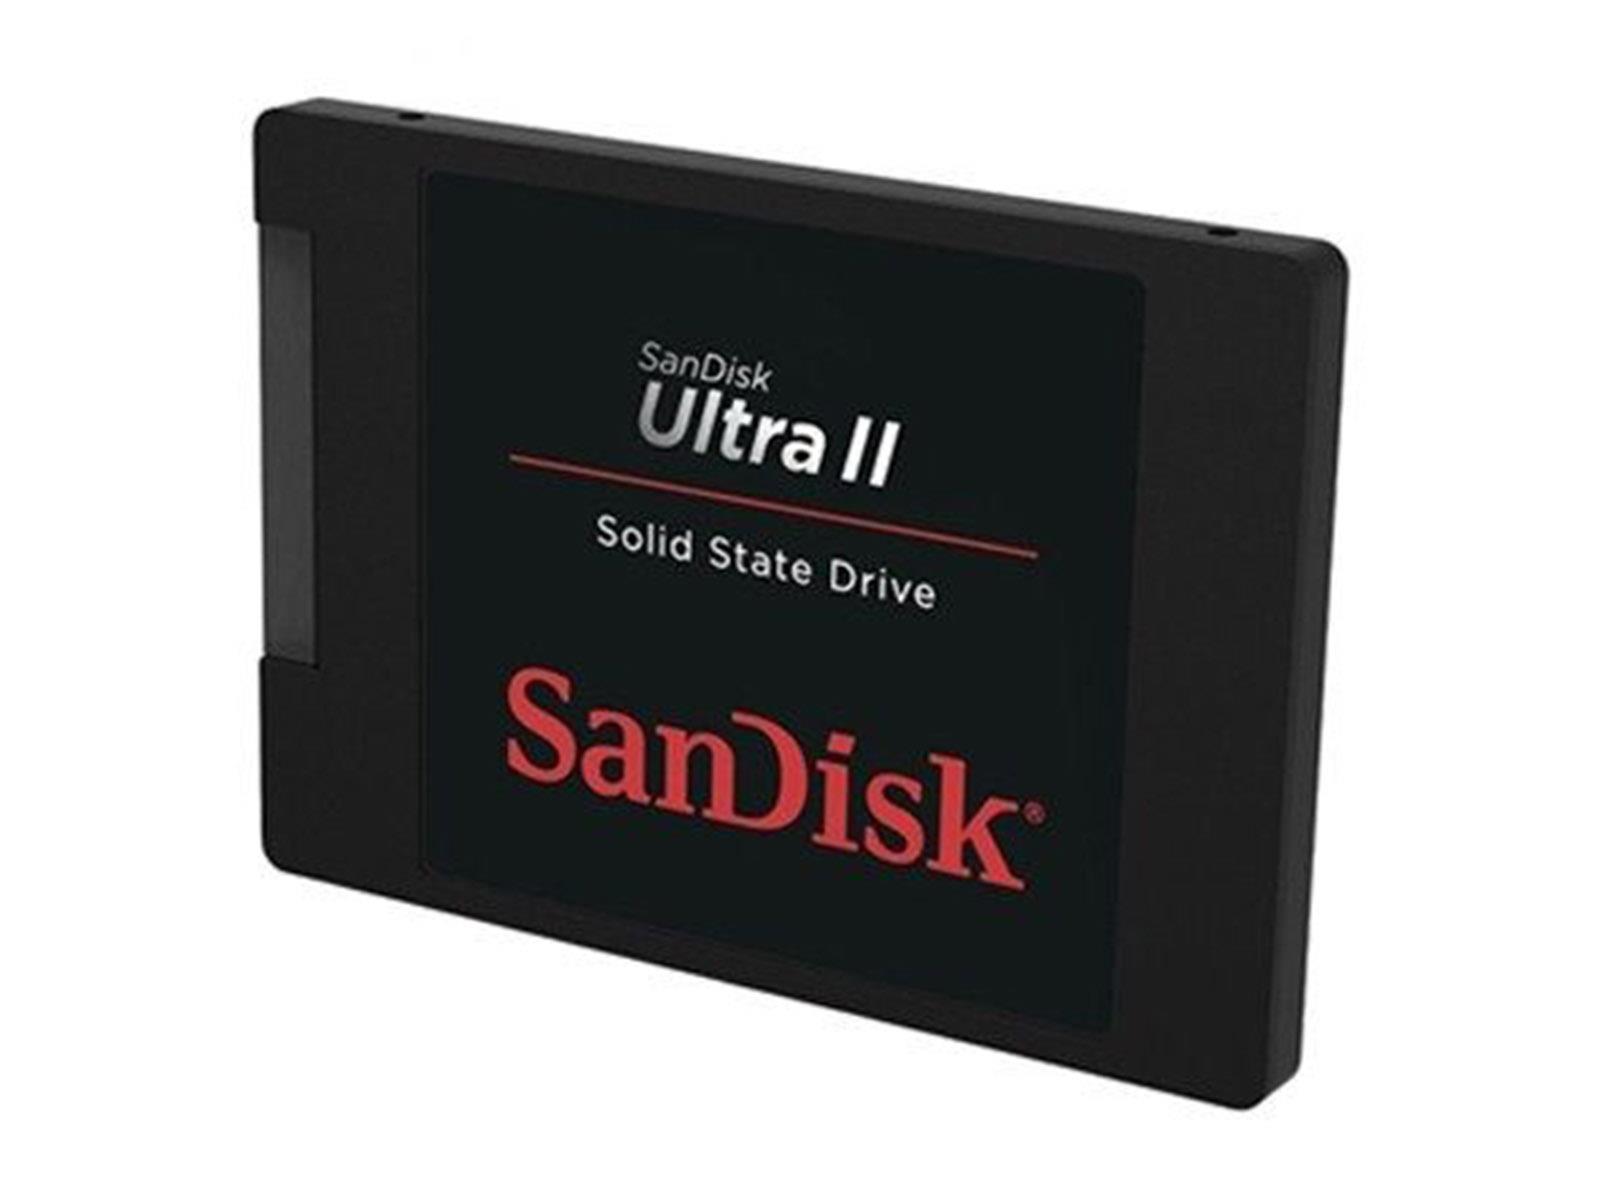 Sandisk Ultra II 120gb SSD